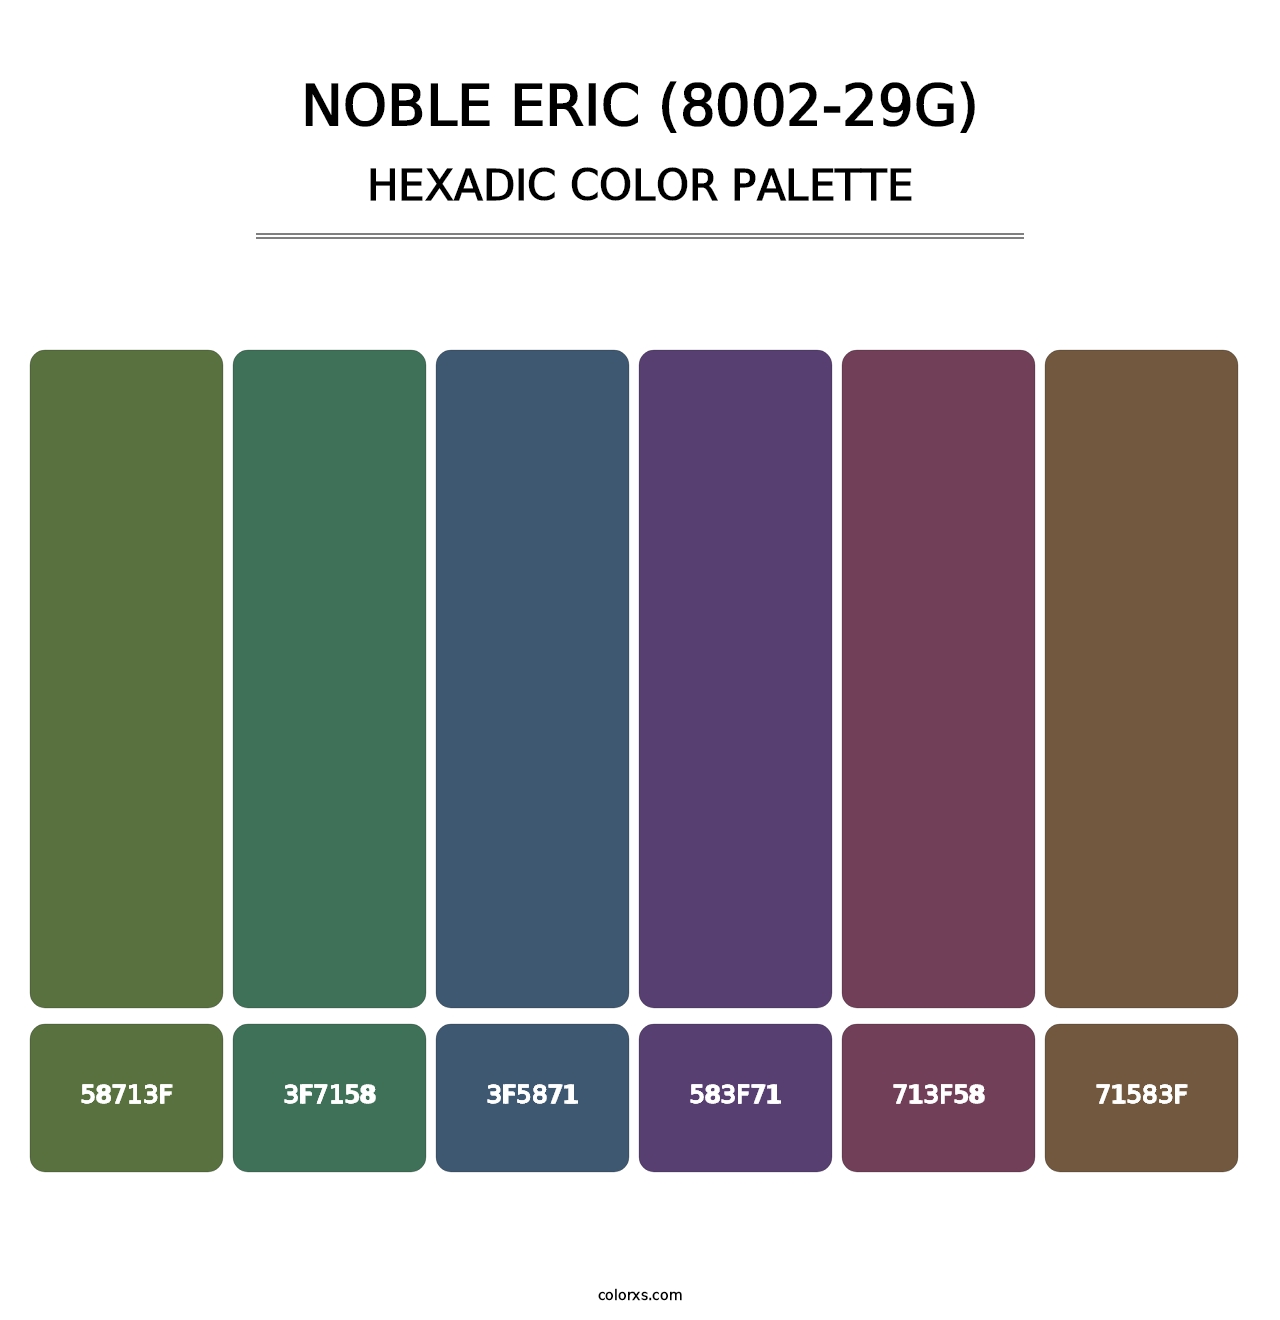 Noble Eric (8002-29G) - Hexadic Color Palette